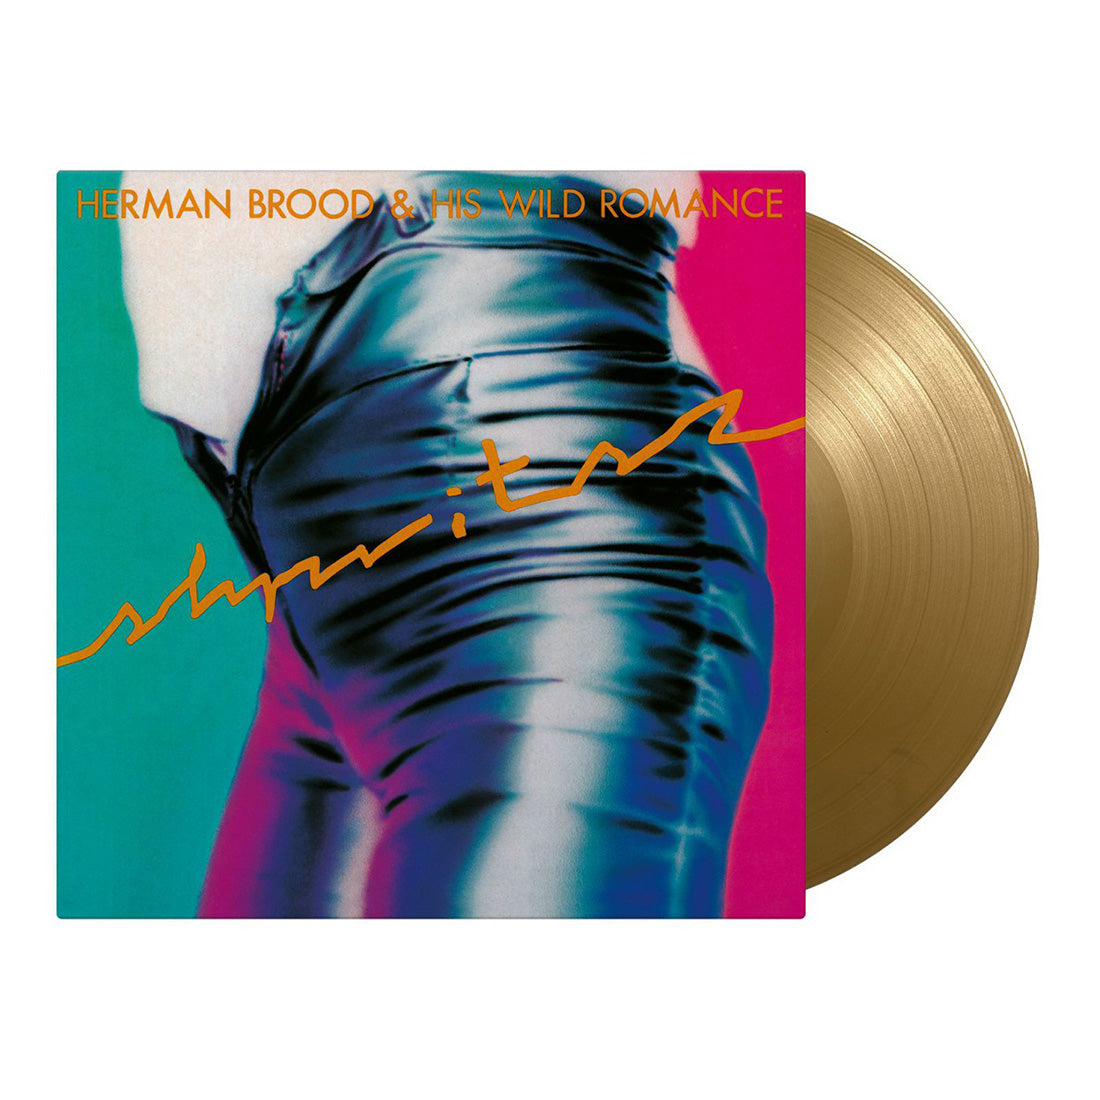 Herman Brood & His Wild Romance - Shpritsz: Limited Gold Vinyl LP